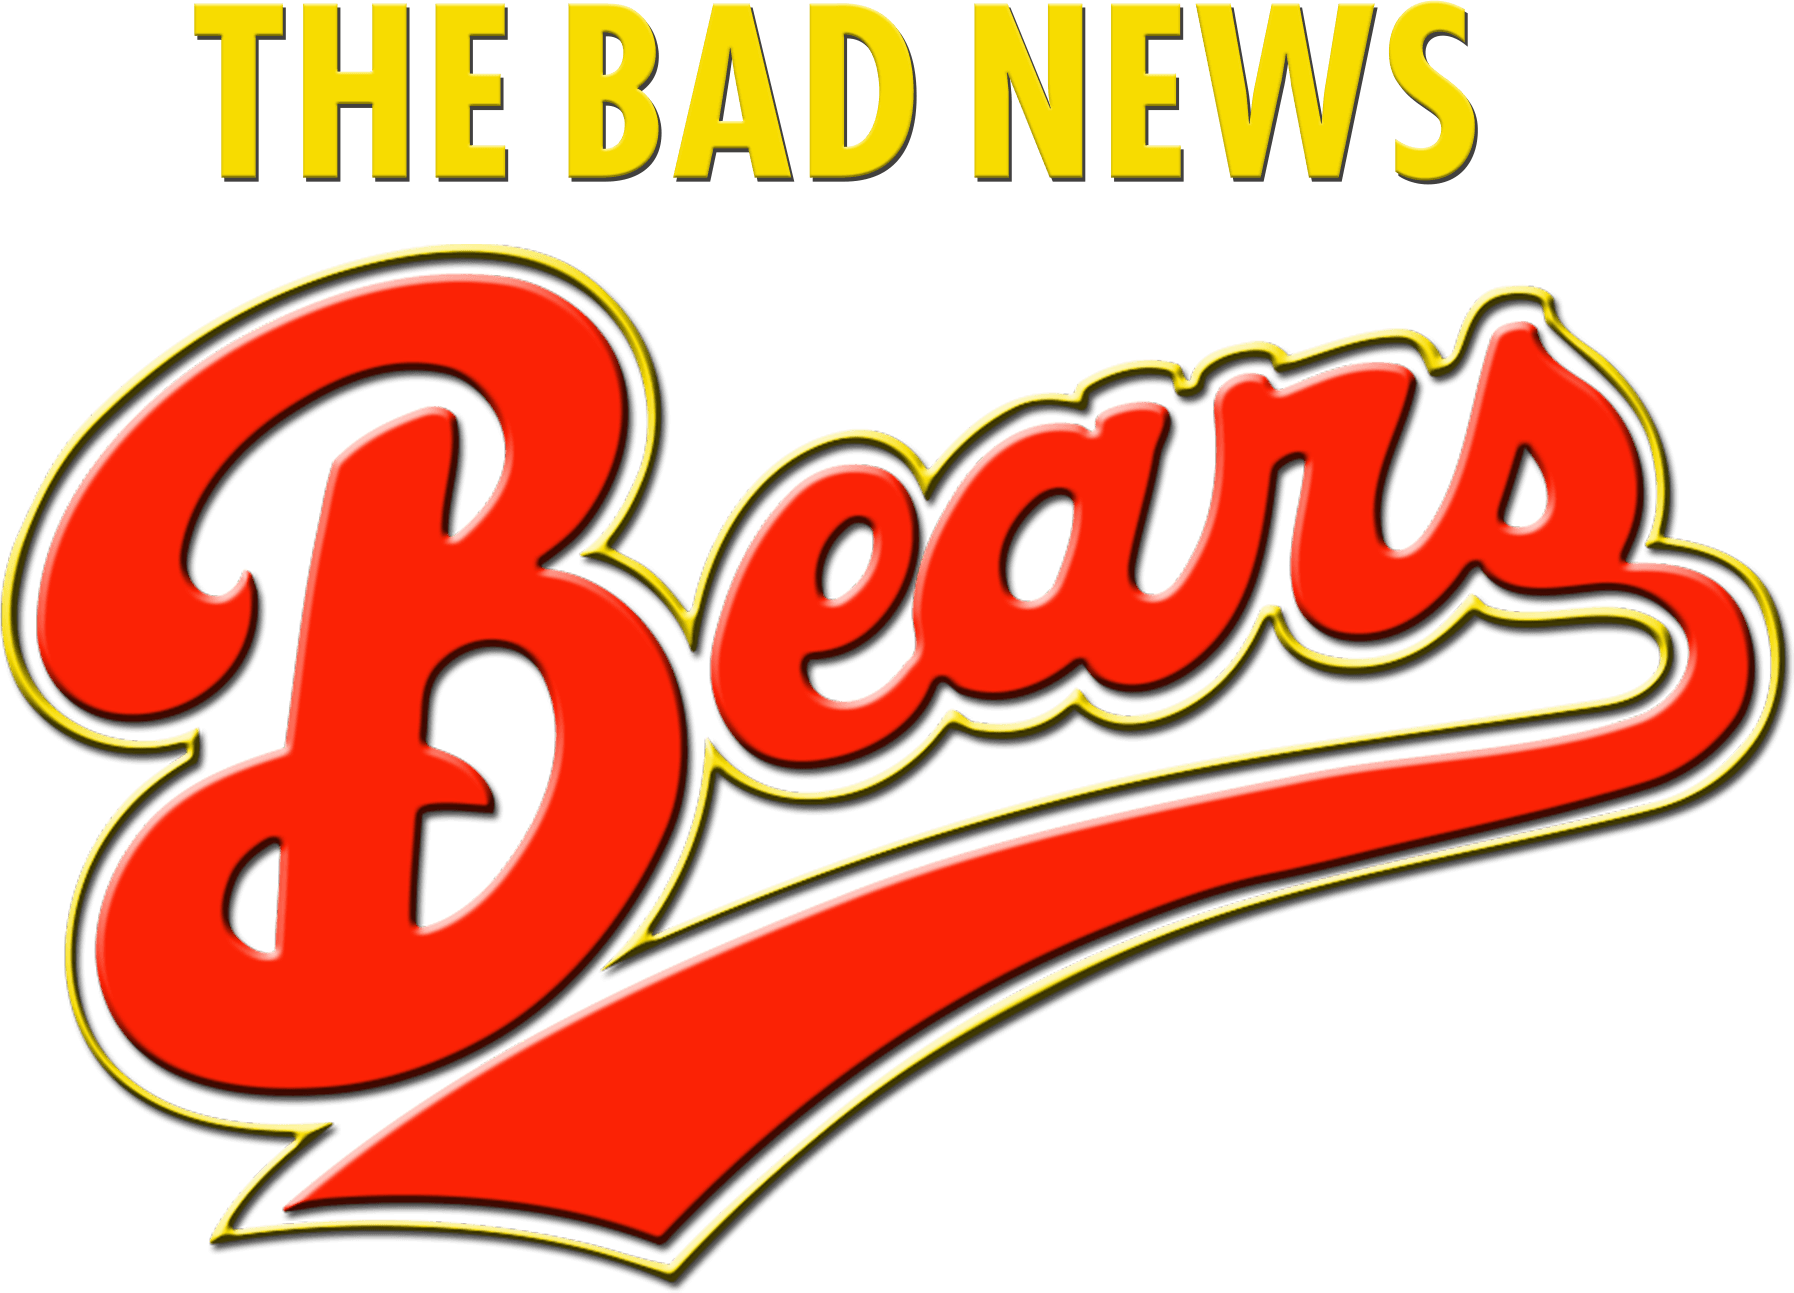 The Bad News Bears logo